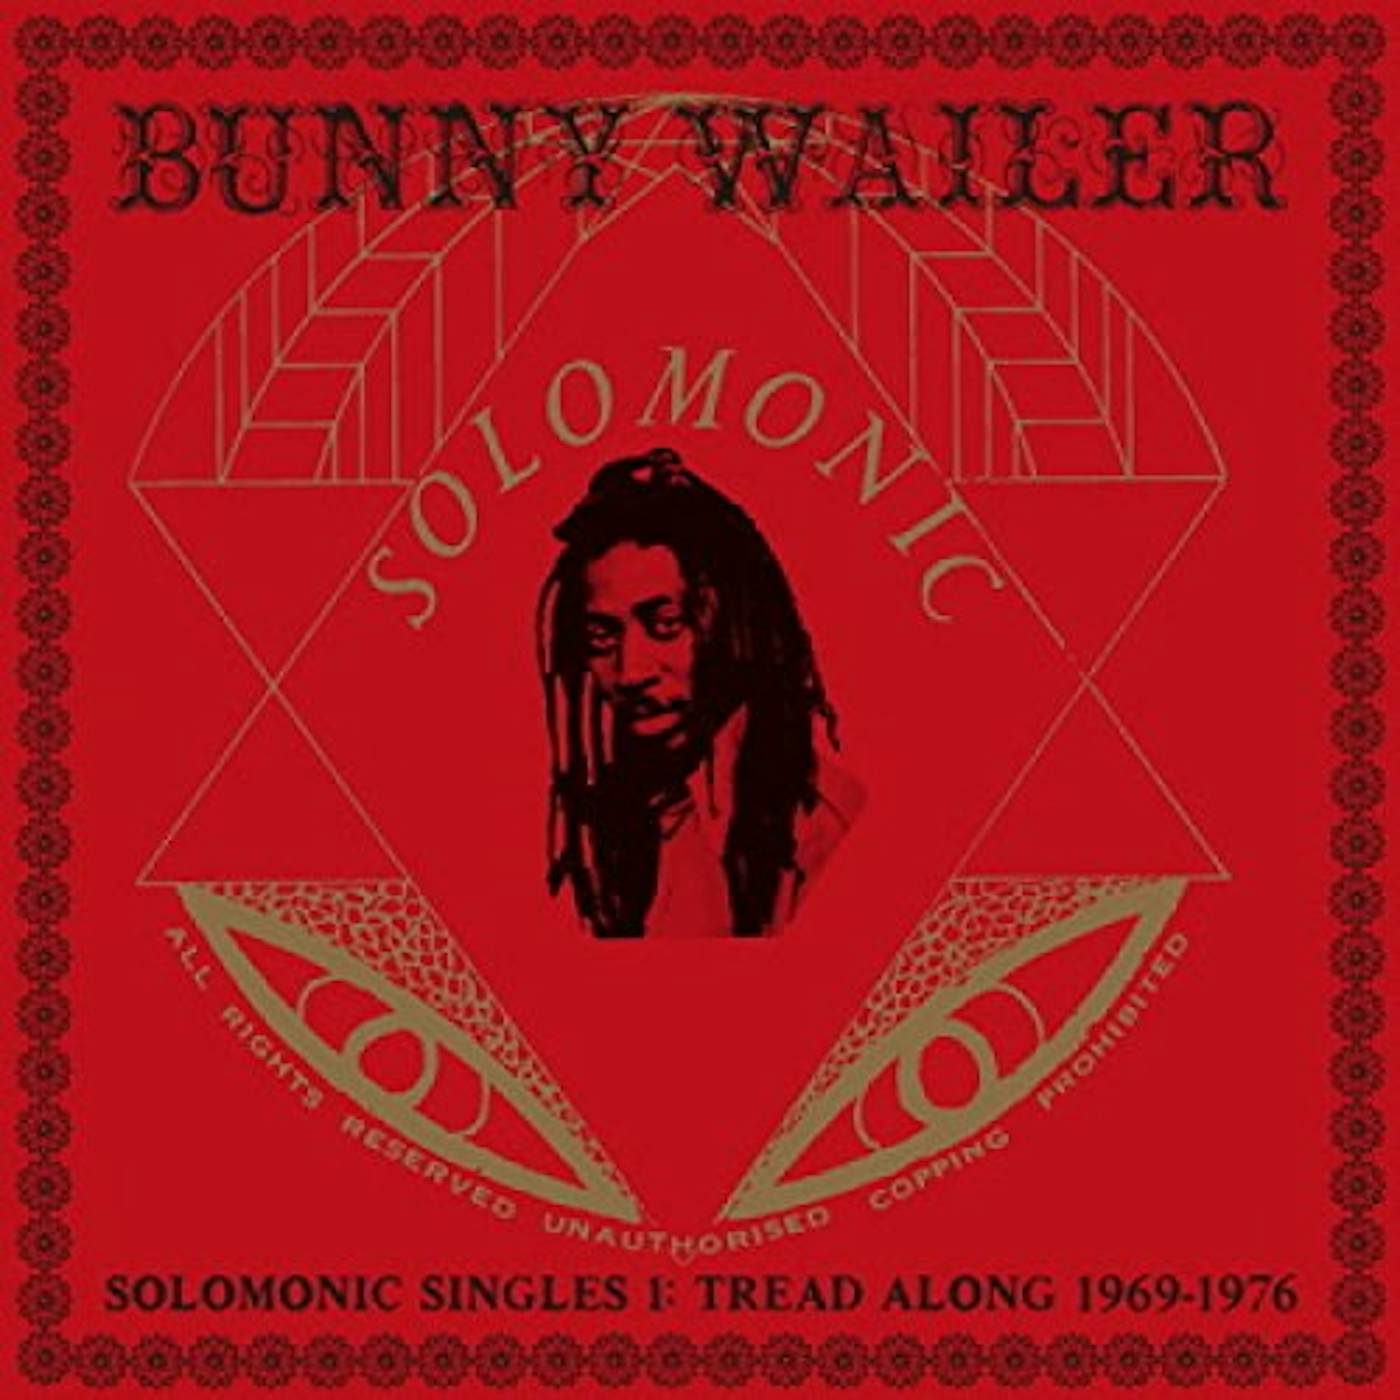 Bunny Wailer SOLOMONIC SINGLES 1: TREAD ALONG 1969-1976 Vinyl Record